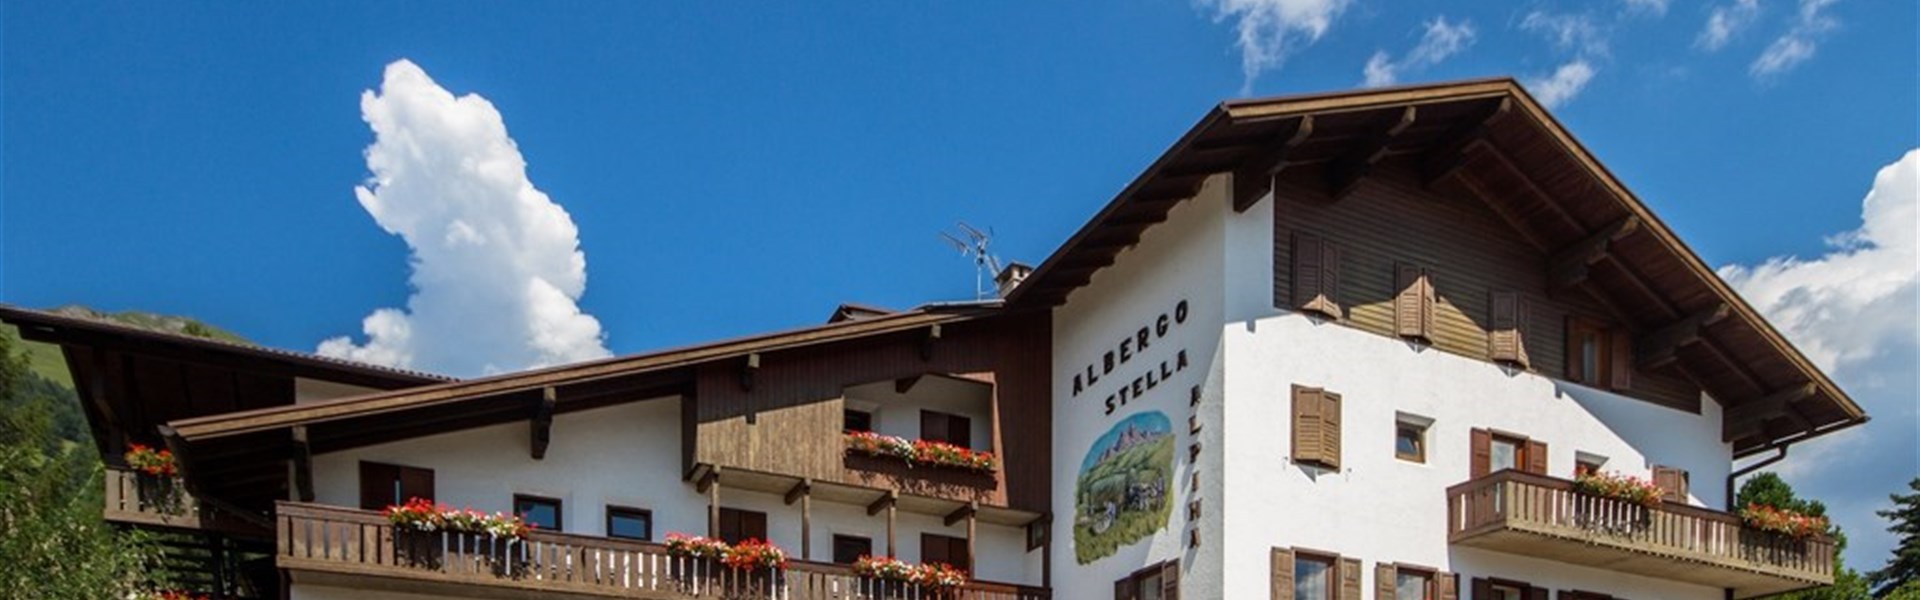 Hotel Stella Alpina (Léto/Sommer) - 